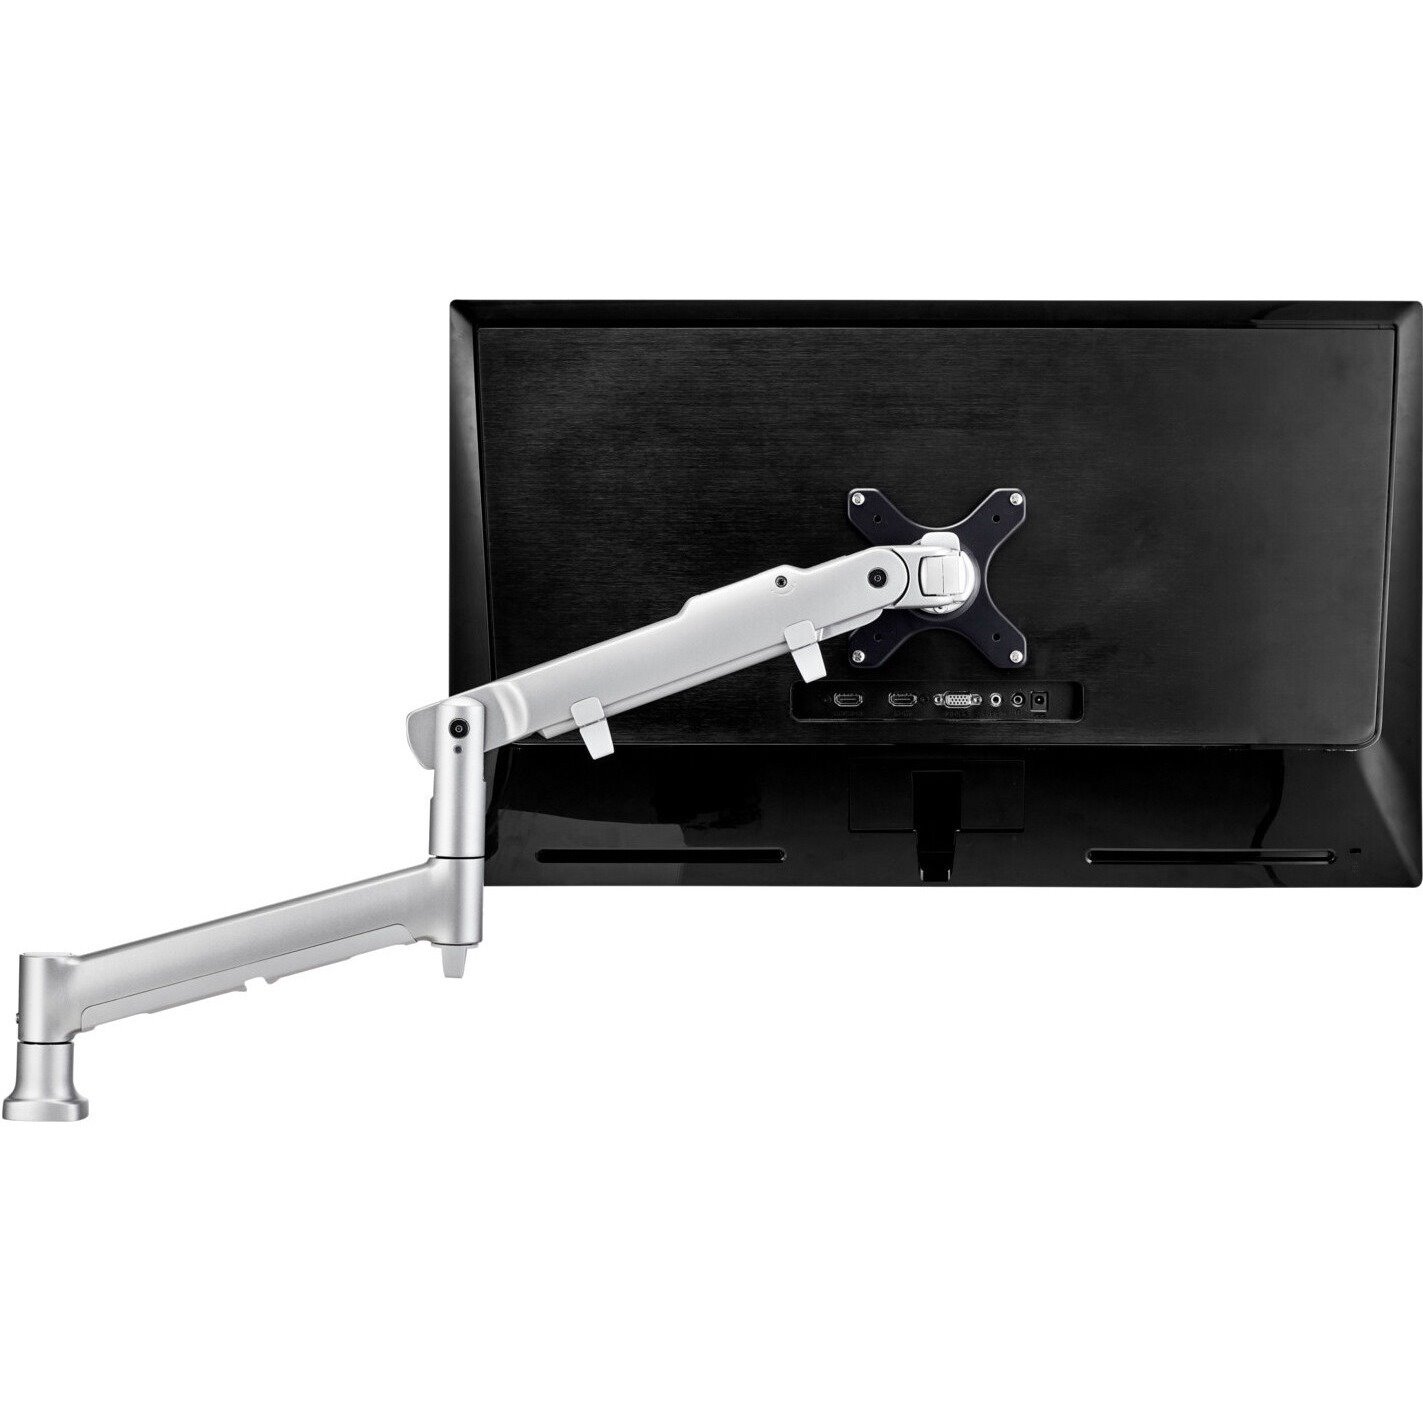 Atdec AWMS-DB Mounting Arm for Display, Curved Screen Display, Flat Panel Display, Monitor - White